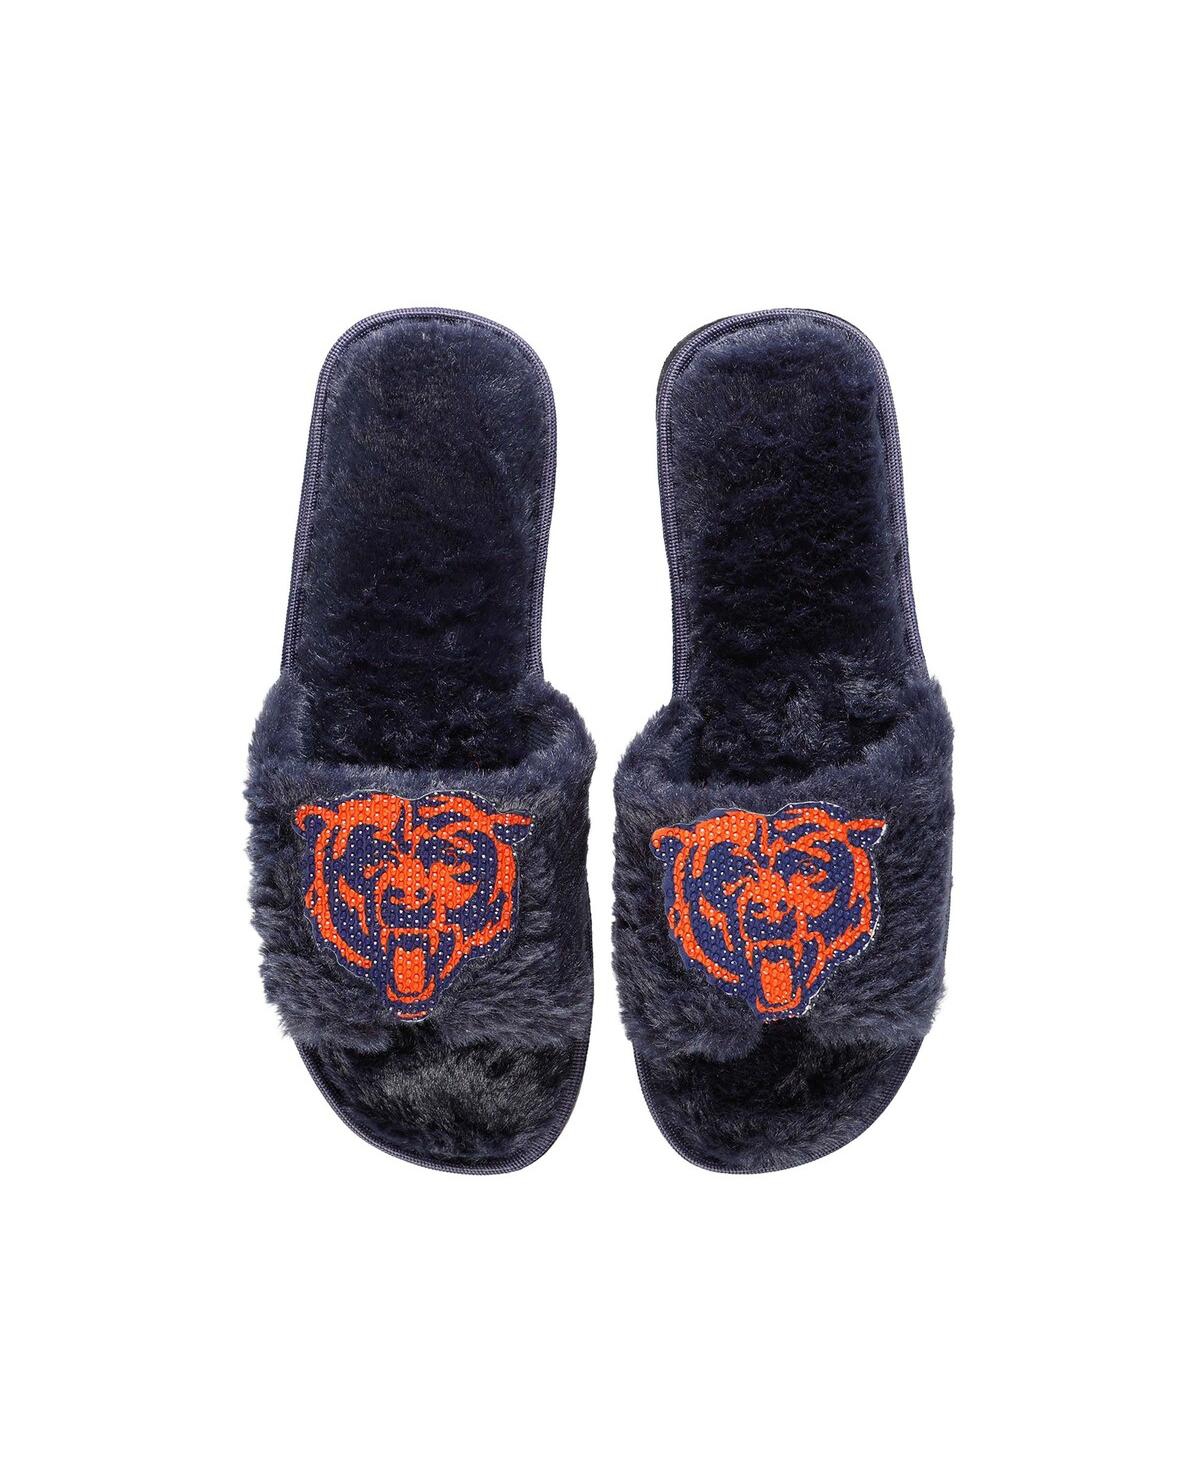 Women's Foco Navy Chicago Bears Rhinestone Fuzzy Slippers - Navy